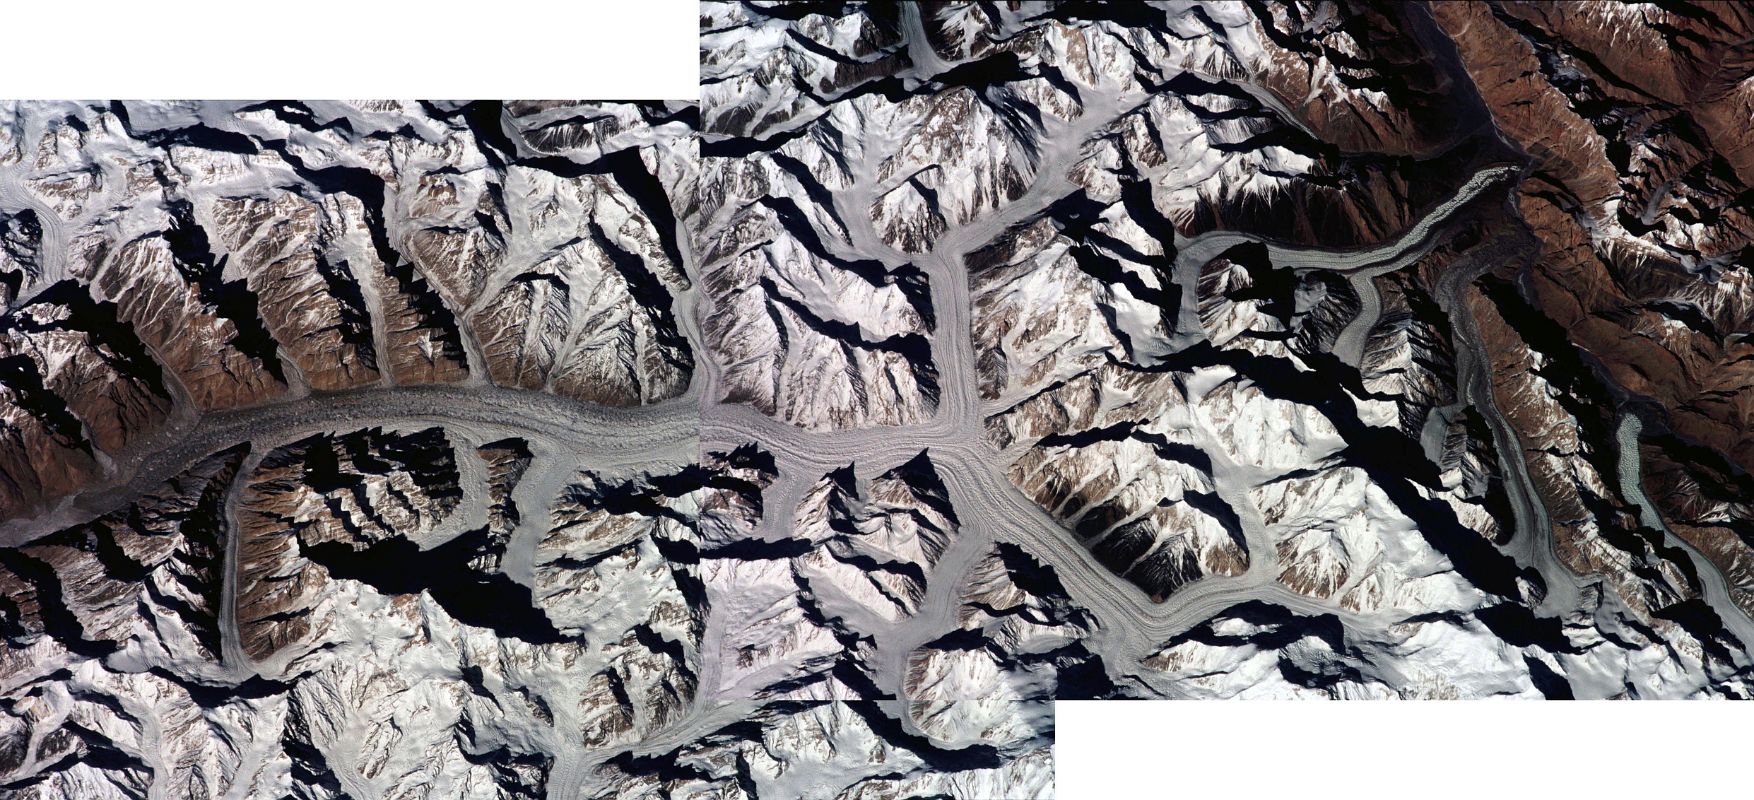 Nasa Baltoro Glacier K2 Broad Peak Gasherbrum I, II and IV Masherbrum ISS001-343-26 and 27 Baltoro Glacier from Paiju to Concordia with K2, Broad Peak, Gasherbrum I, Gasherbrum II and Gasherbrum IV, Masherbrum  - Nasa Image ISS001-343-26 and 343-27.